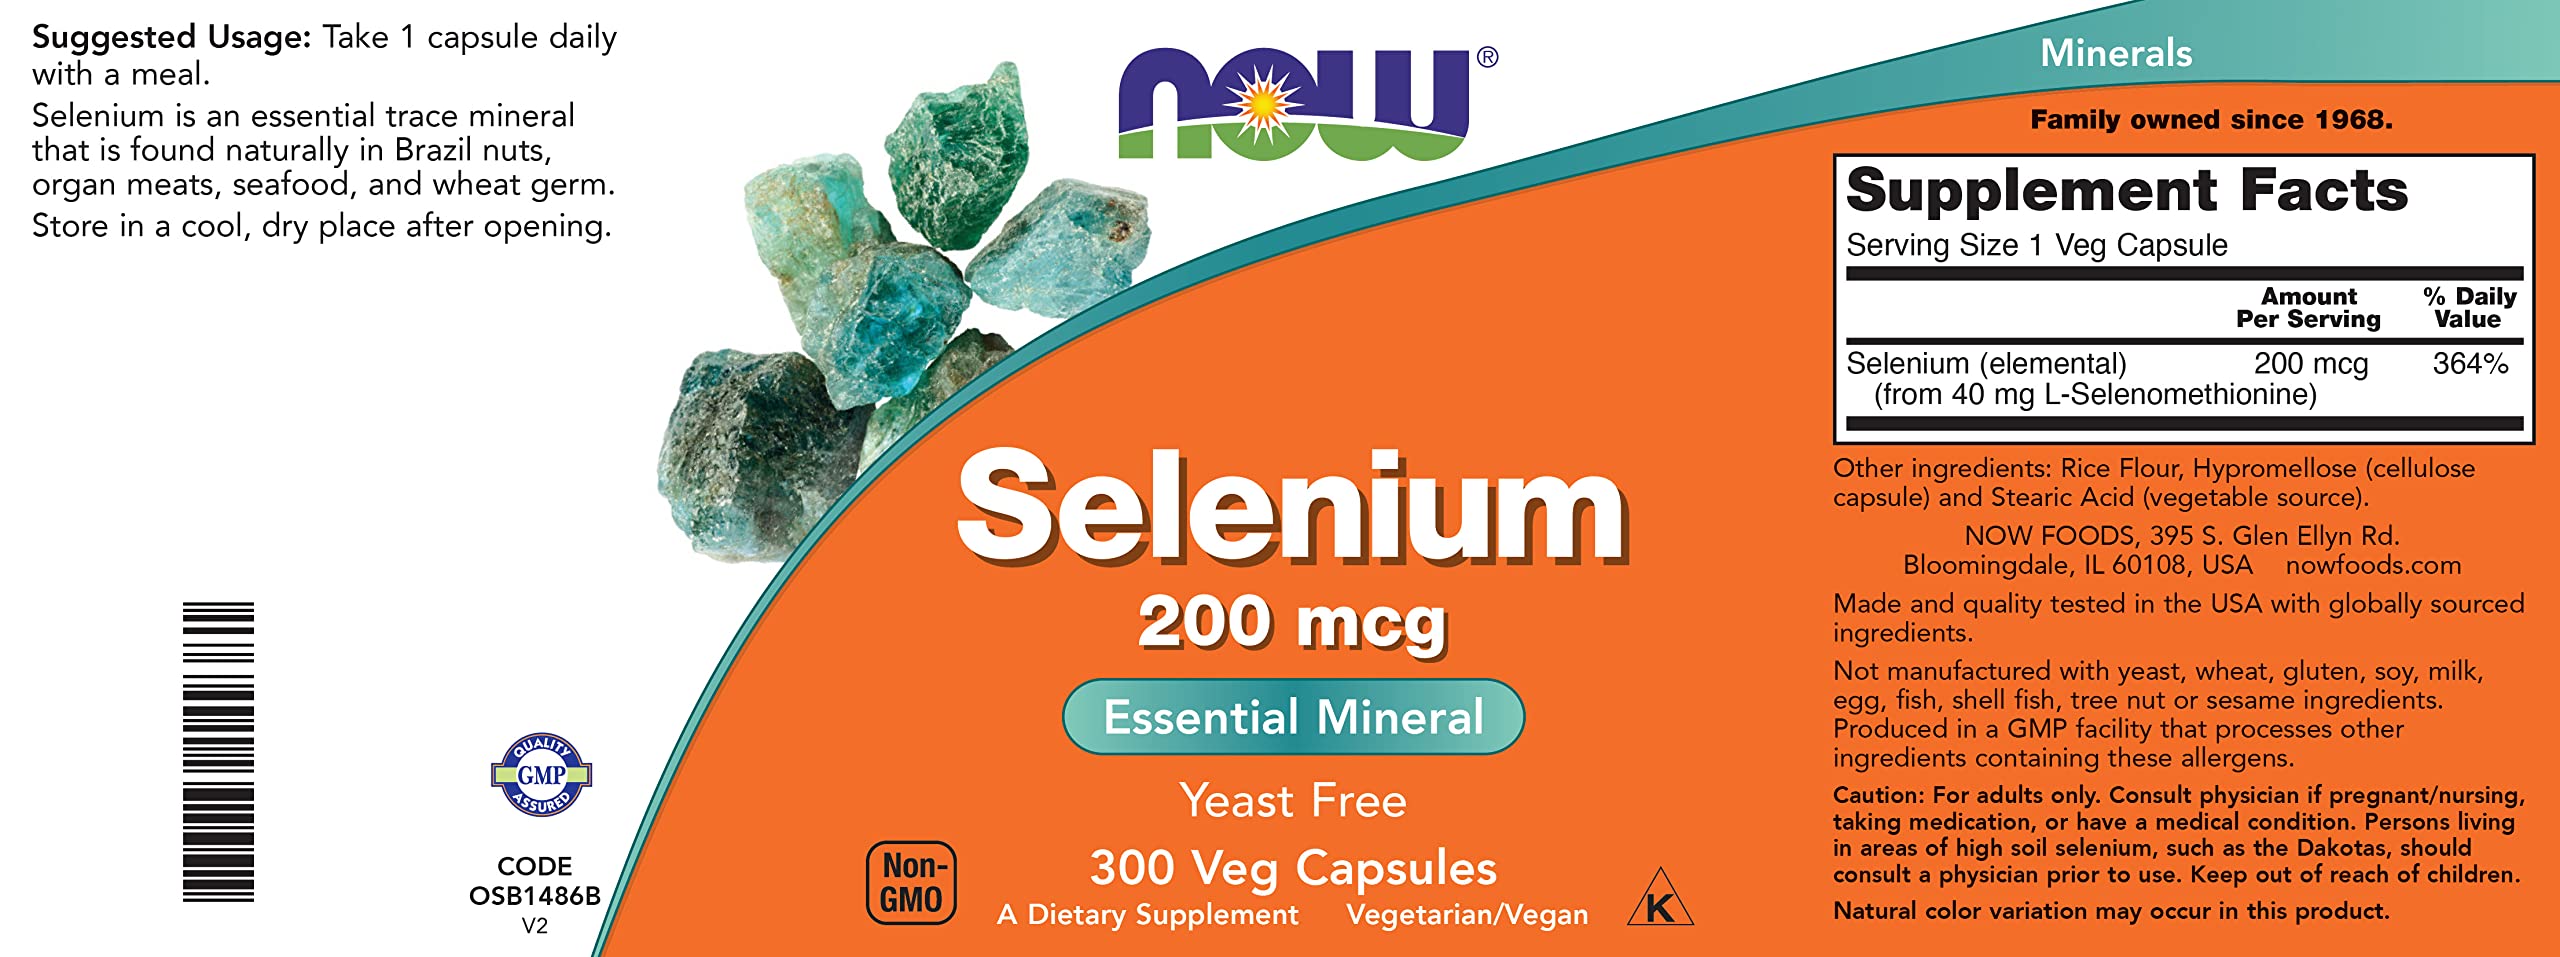 Now Foods Selenium 200mcg Capsules, 300 Count - L Selenomethionine Mineral Supplement for Women & Men - Veg Caps, Non-GMO, Vegan Friendly, Yeast-Free